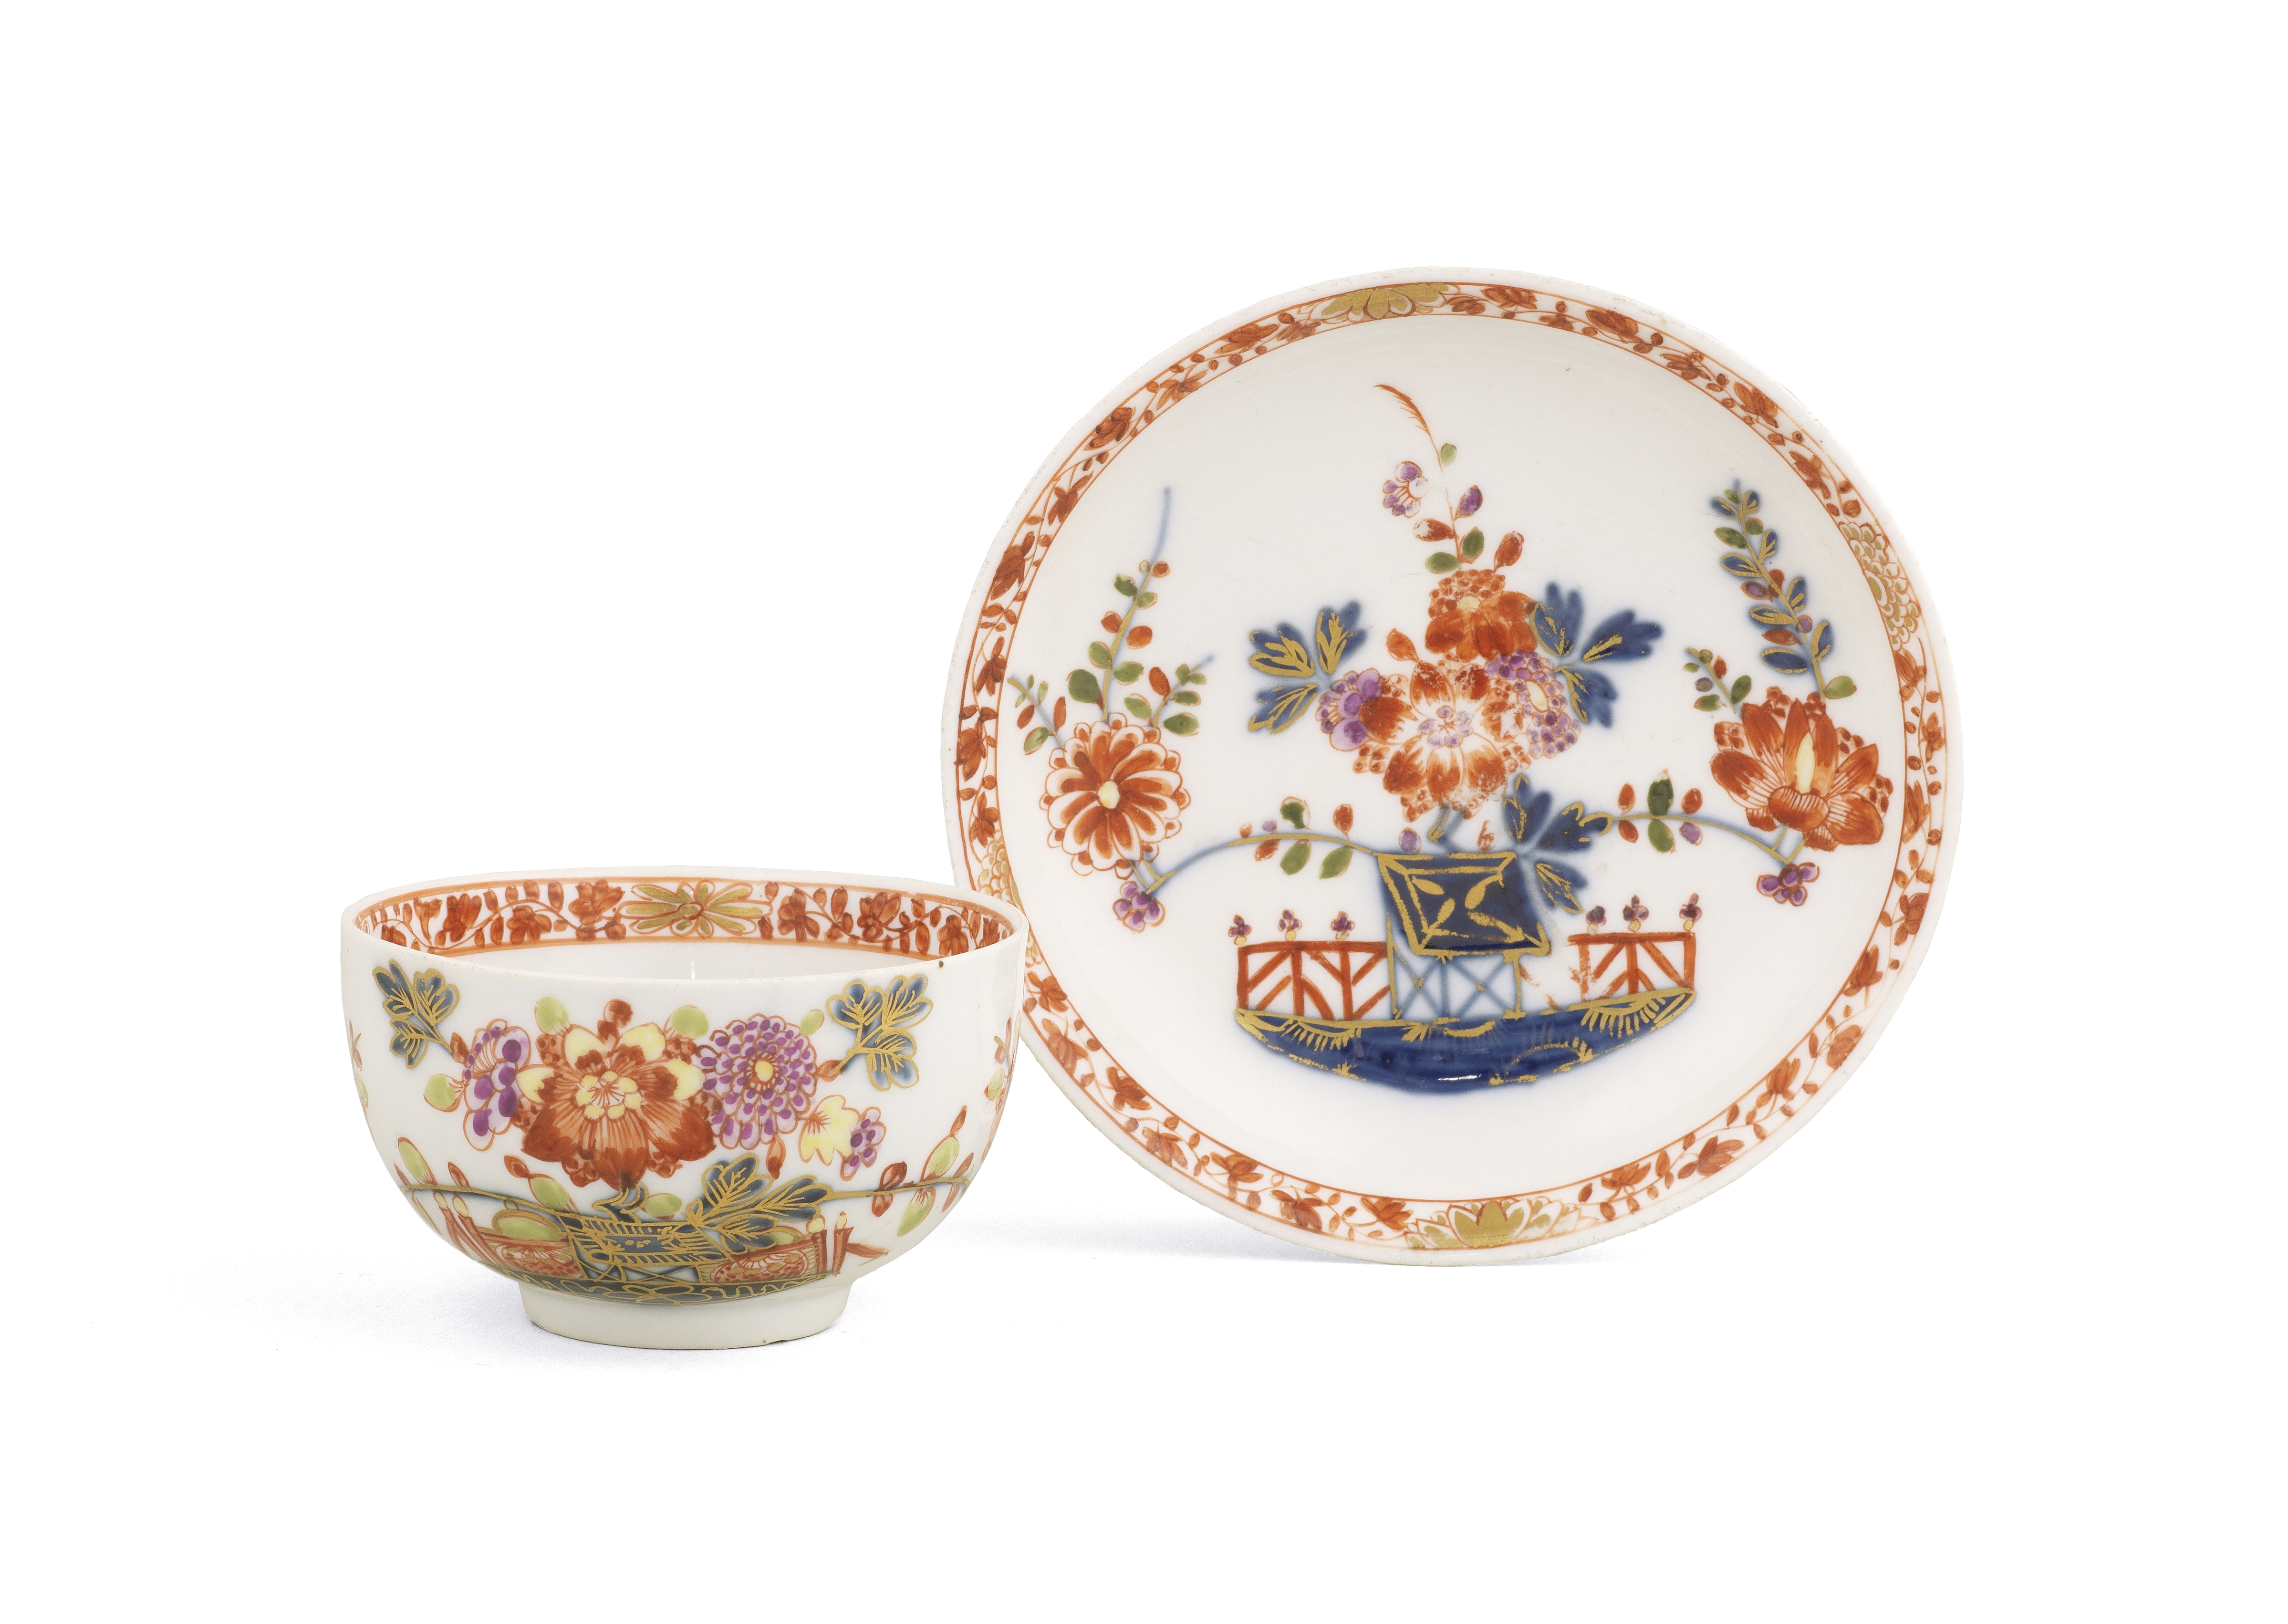 A Meissen teacup and saucer Circa 1740-50